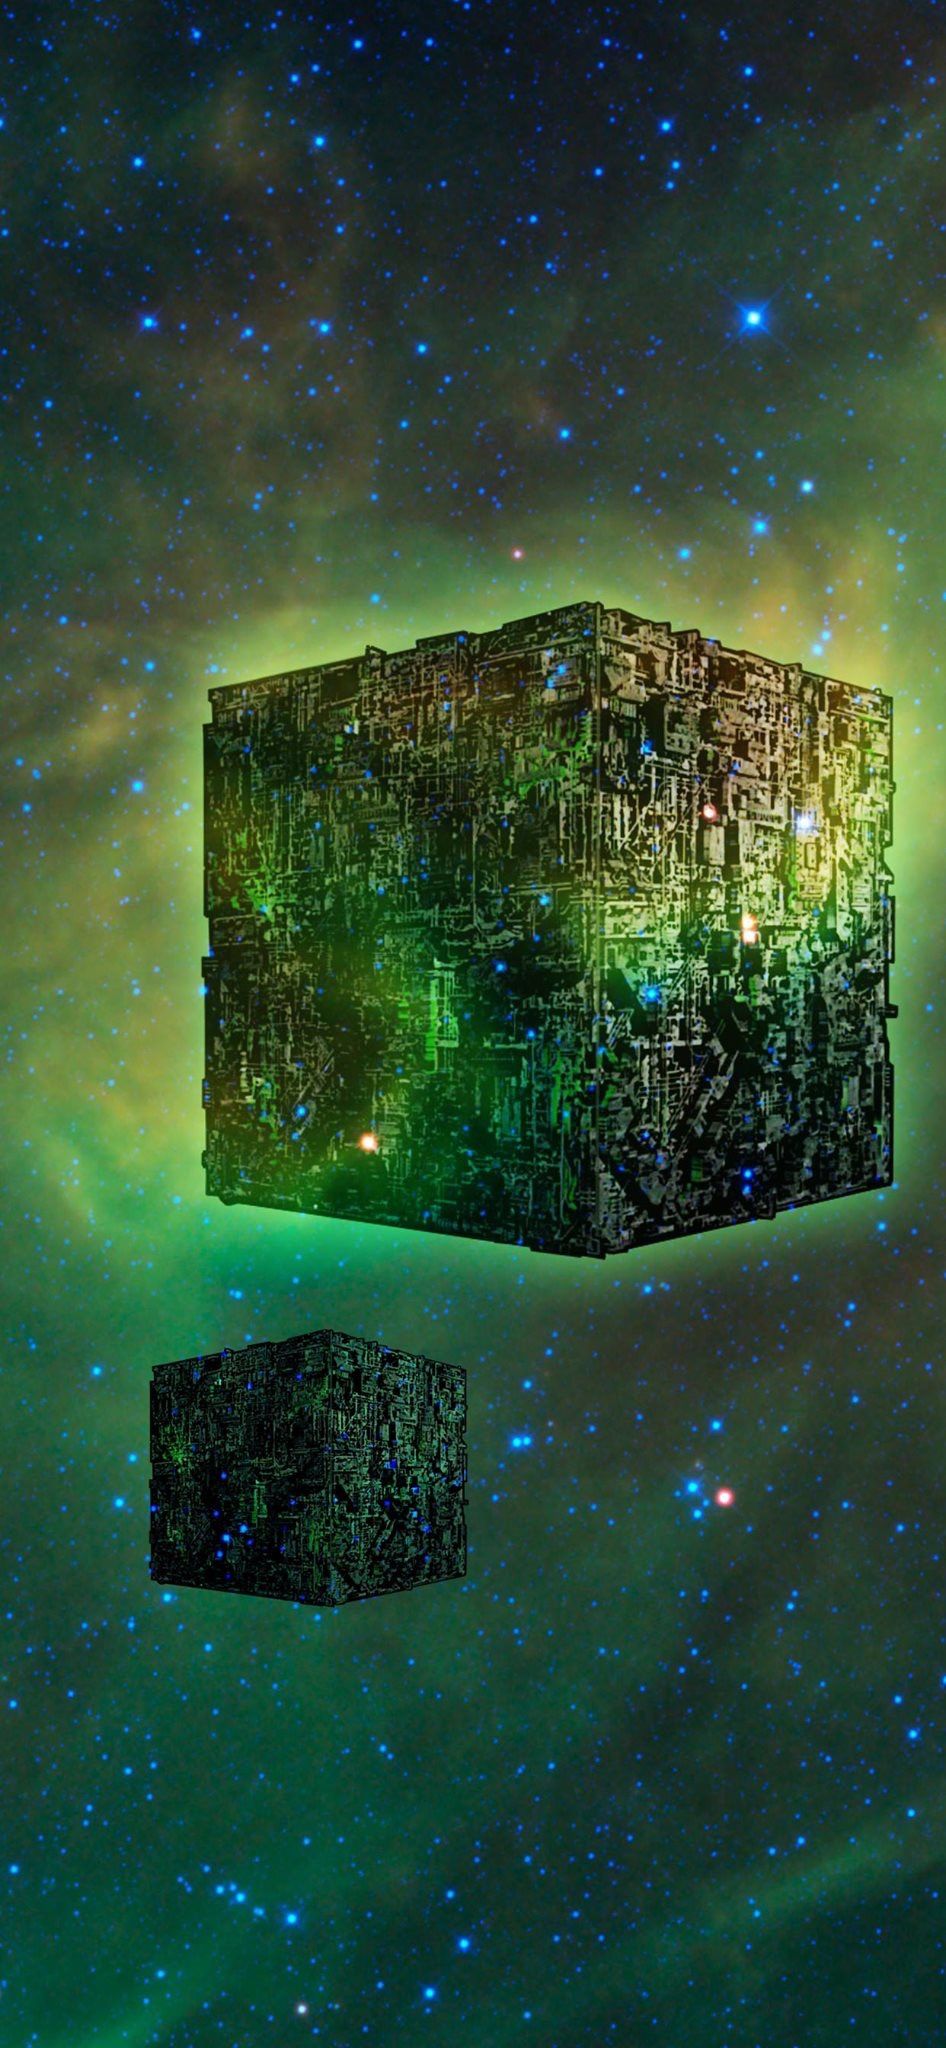 Borg Cube Wallpaper iPhone. Star trek wallpaper, Star trek borg, Star trek art